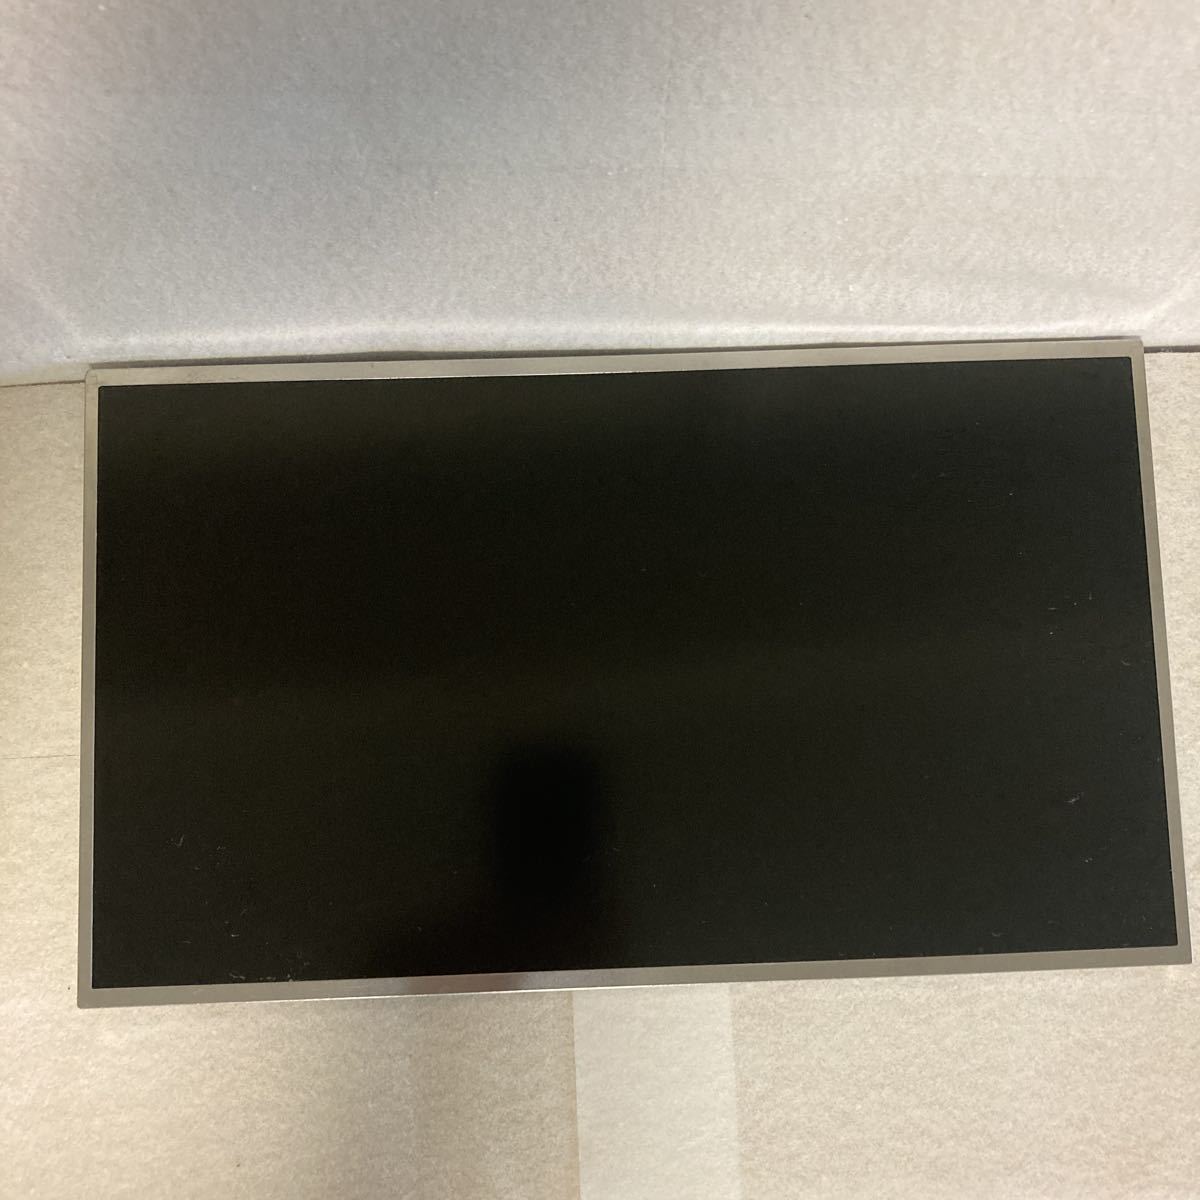 LP156WD1(TL)(B2)15.6 -inch laptop liquid crystal panel (157)